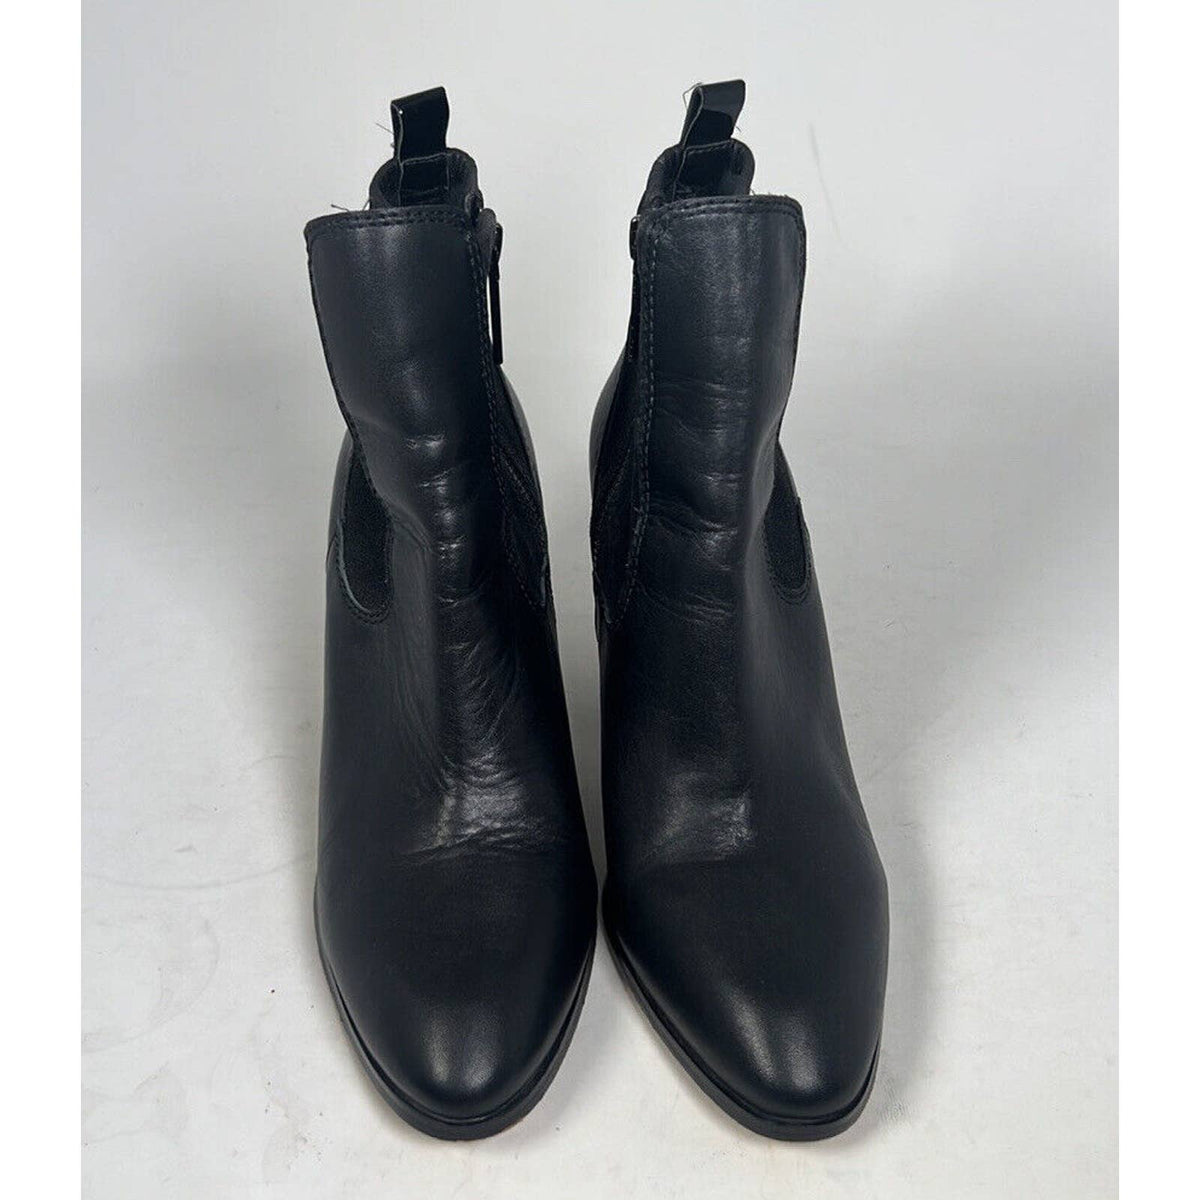 Donald J Pliner Senor Black Leather Block Heel Boots Sz.9.5